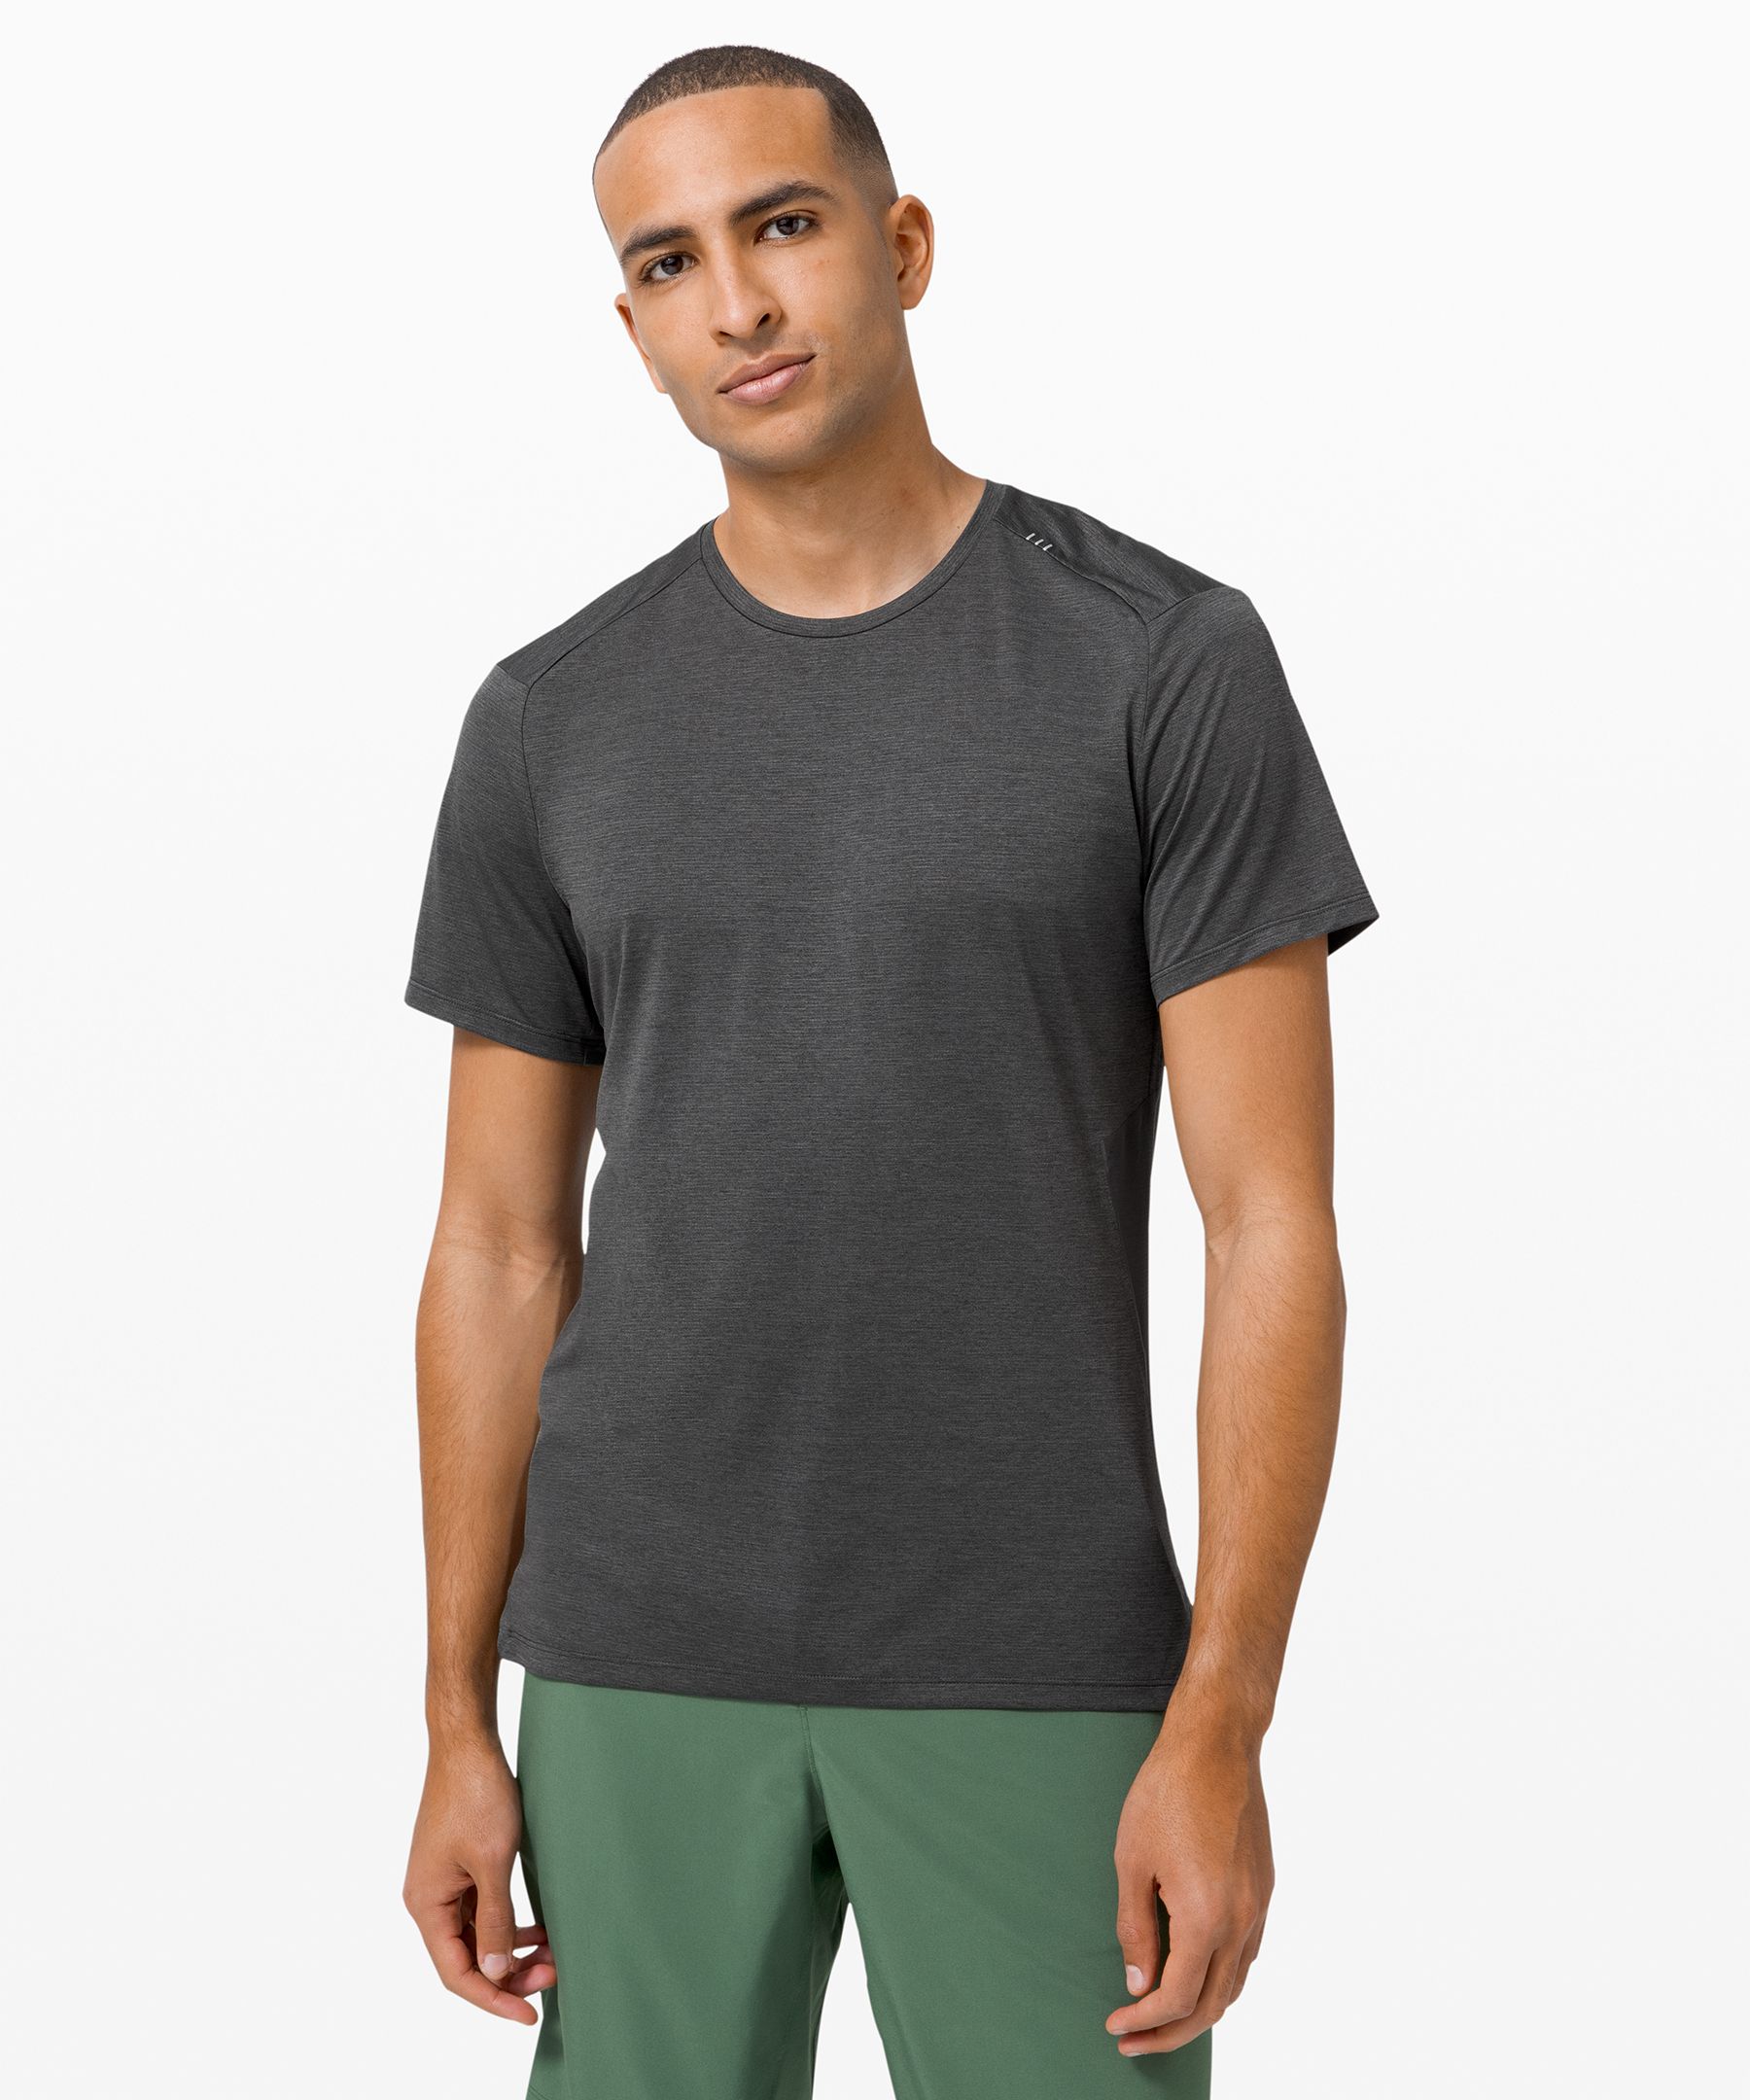 Lululemon Fast And Free Short Sleeve Shirt In Heathered Graphite Grey/graphite Grey